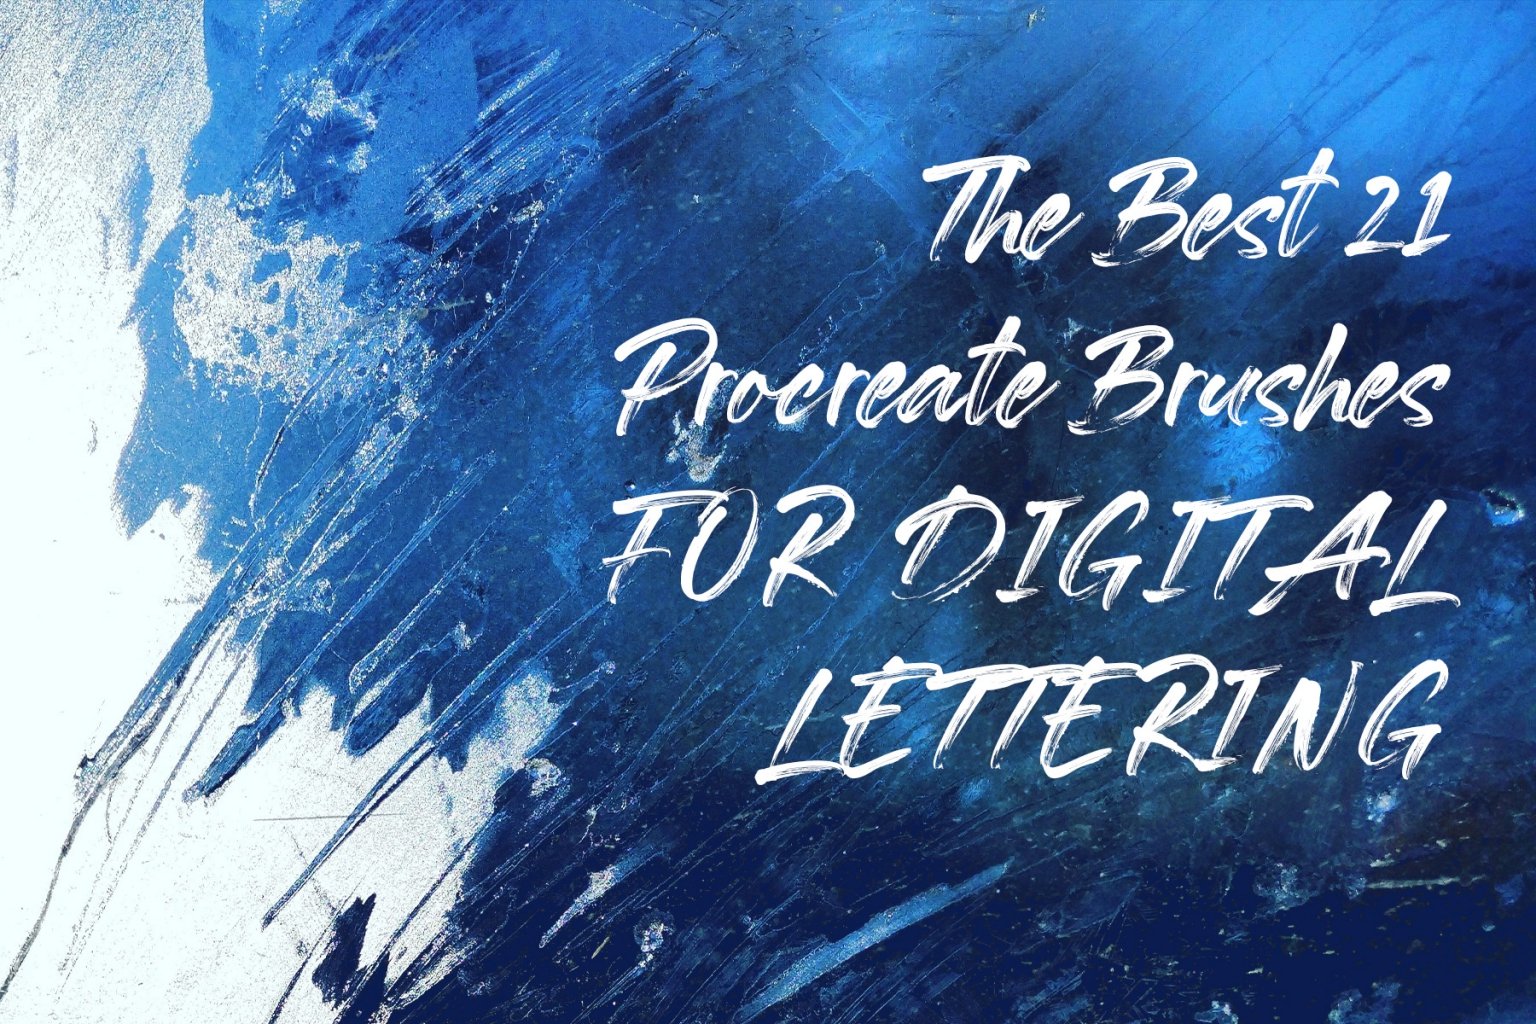 The Best 21 Procreate Brushes for Digital Lettering